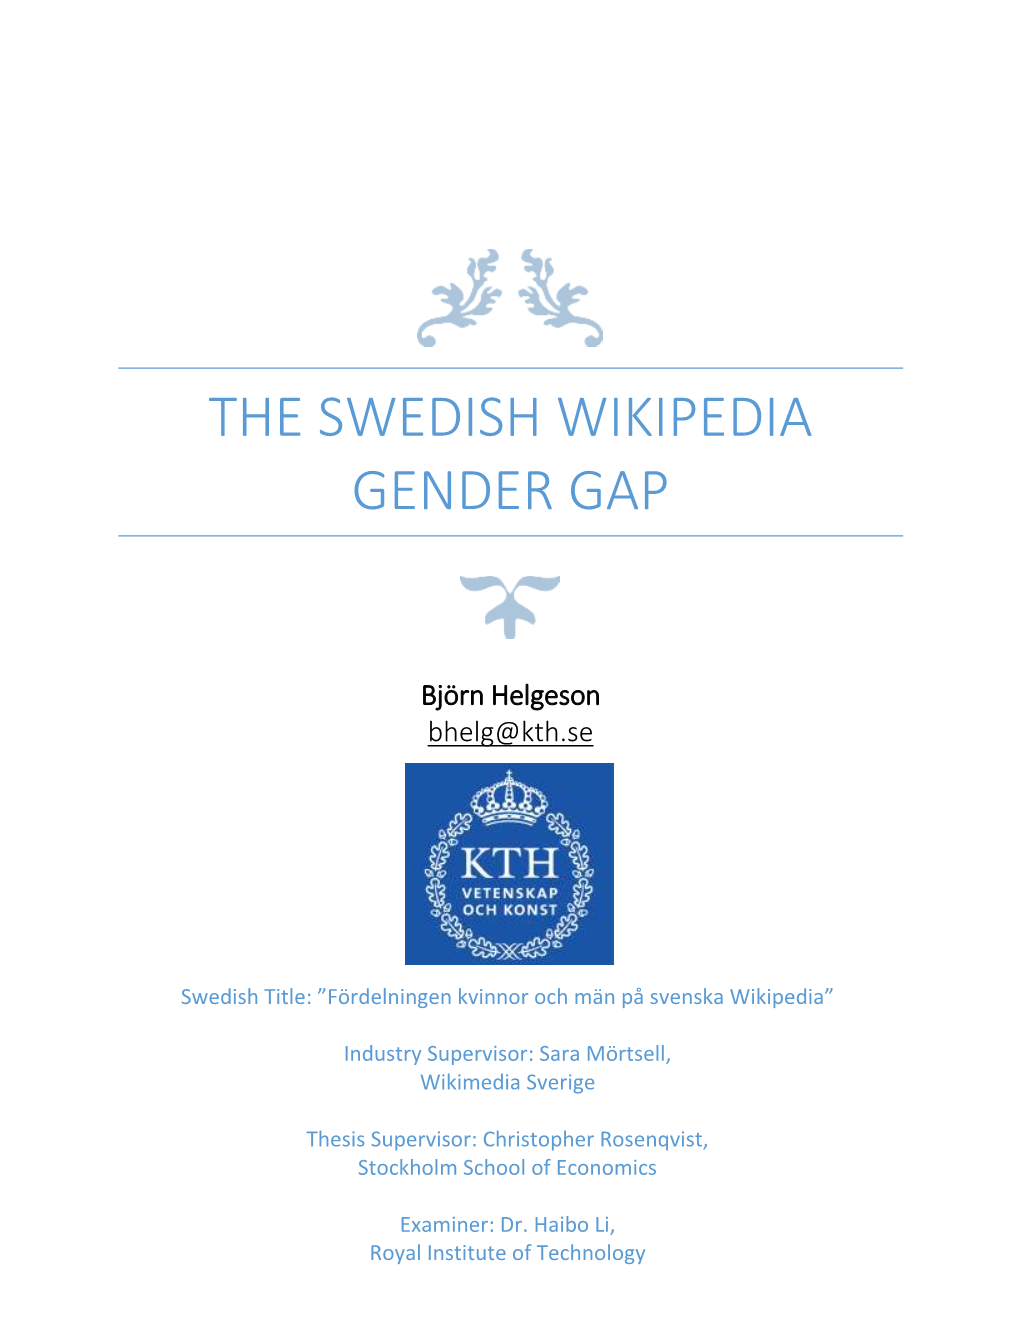 The Swedish Wikipedia Gender Gap